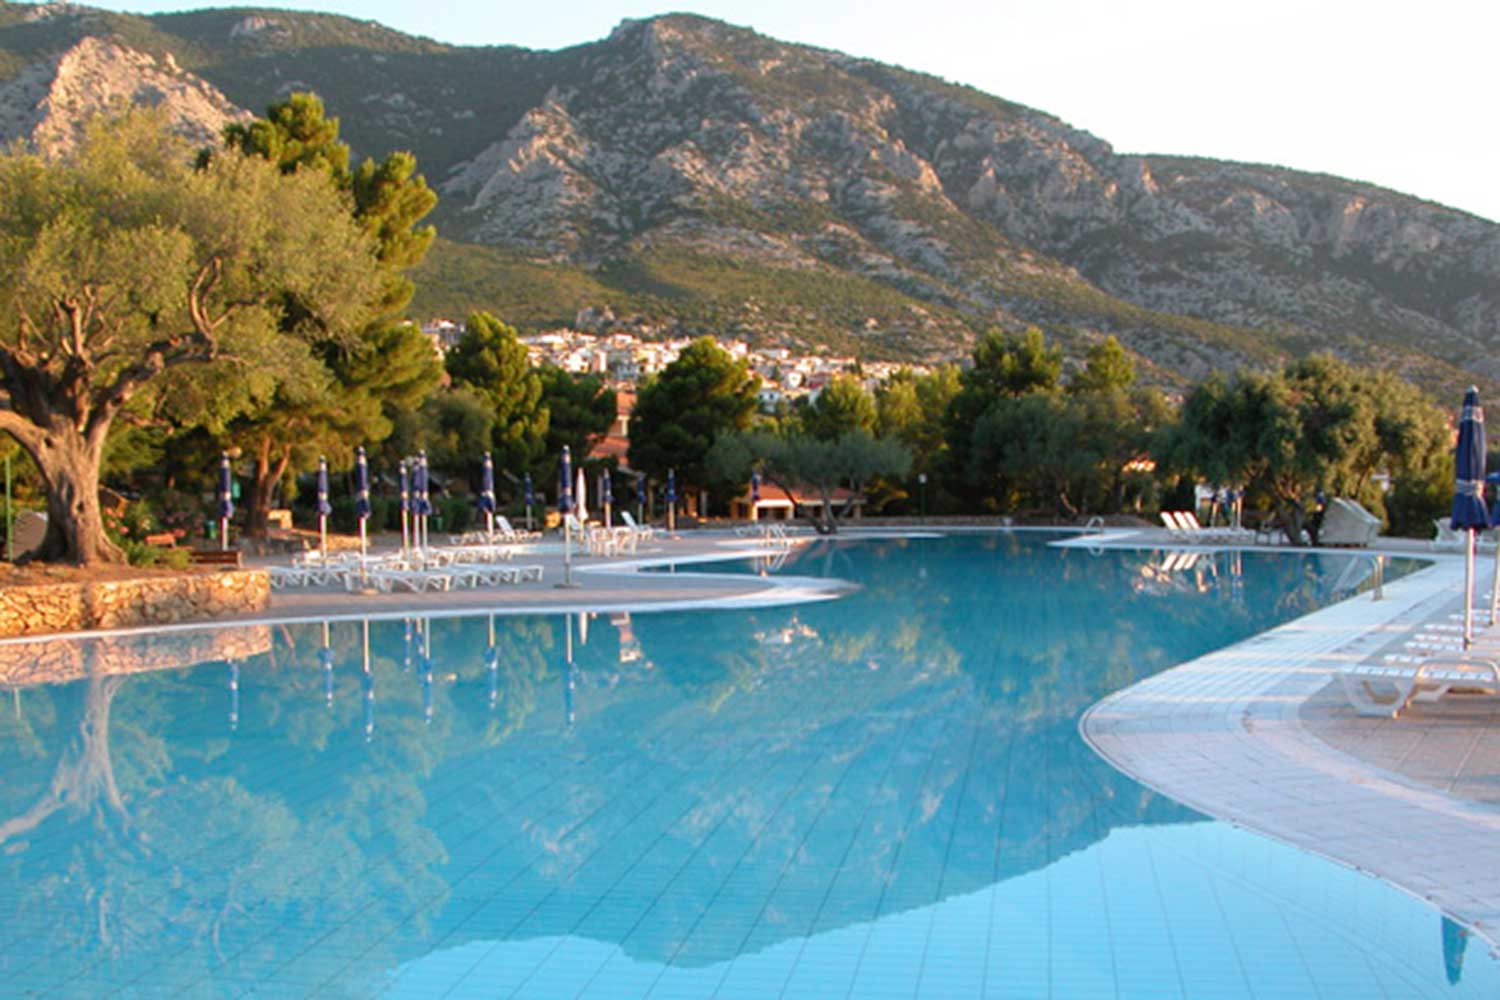 La piscina del Resort Al inclusive Palmasera Village